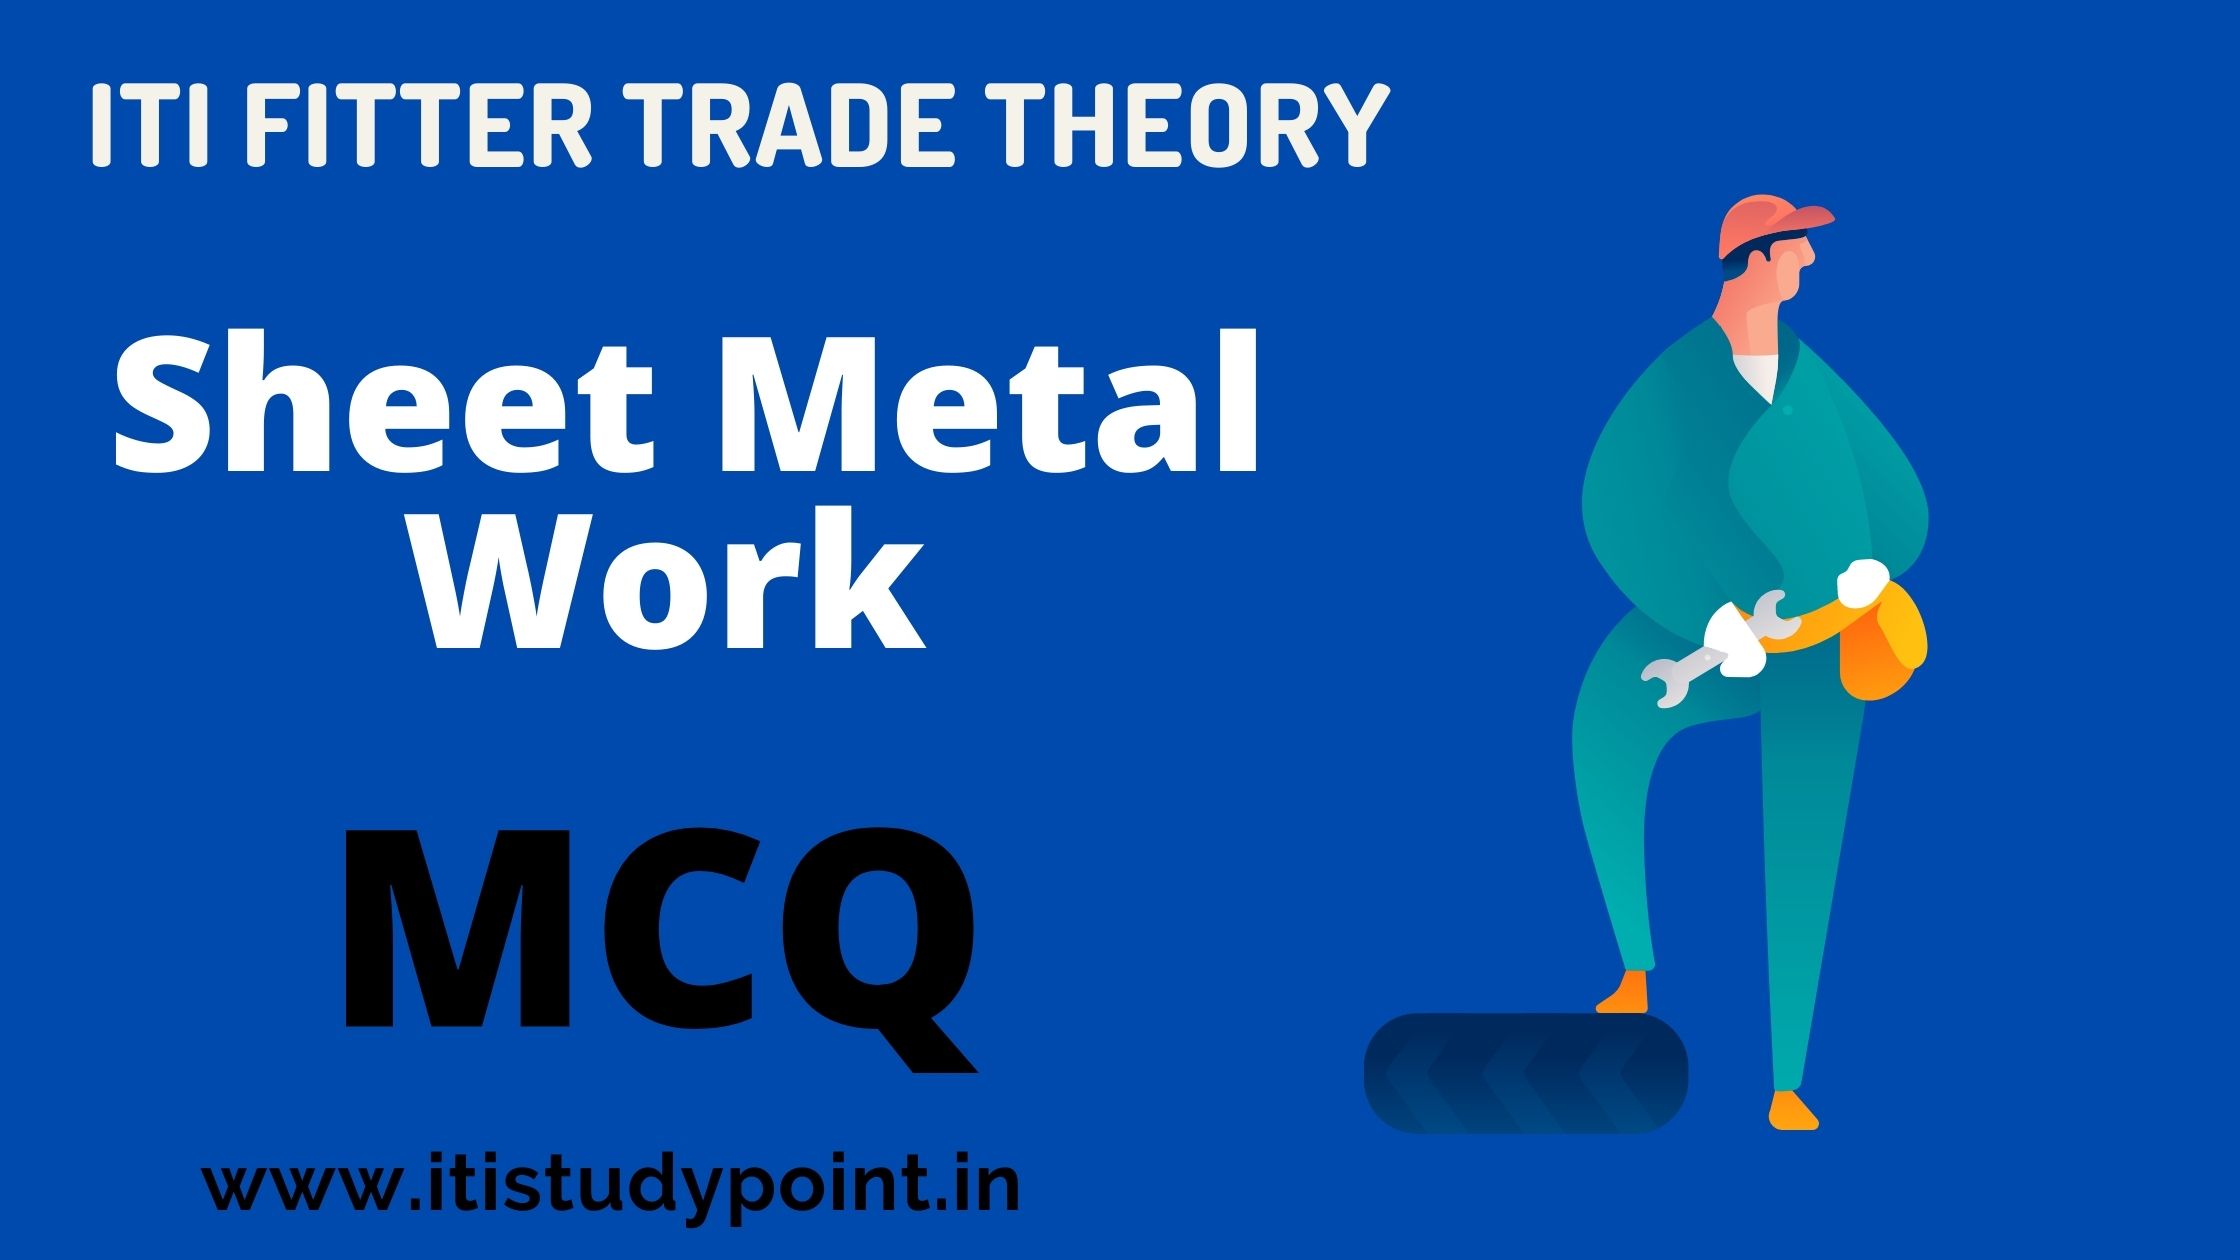 Sheet Metal Work MCQ 1 || ITI Fitter Trade theory